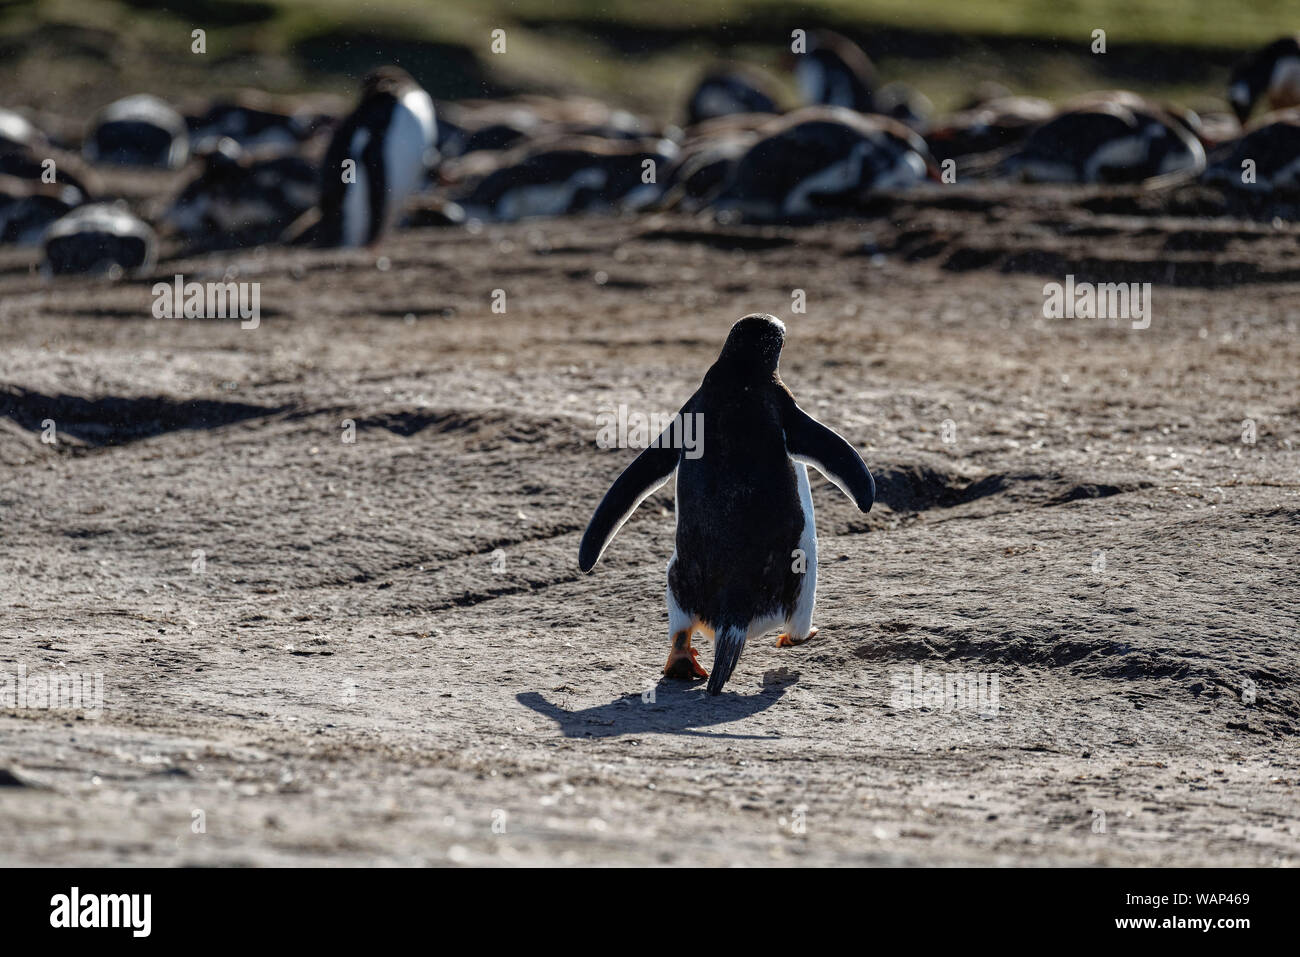 Eselspinguin (Pygoscelis papua), Falkland Rückansicht Inseln. Pingüinos caminando de regreso a su colonia, Falkland Islands Foto de stock